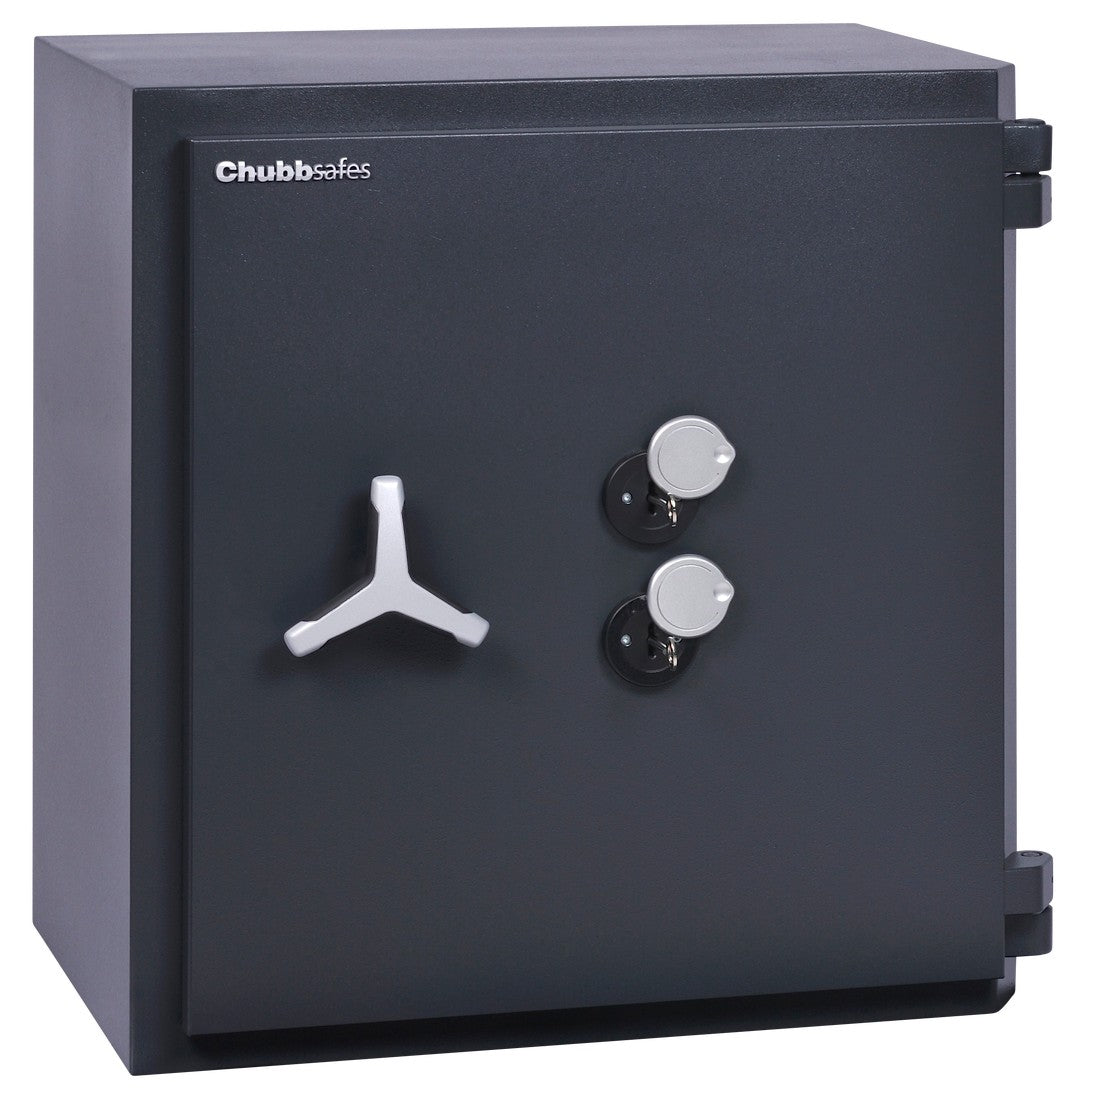 Chubbsafes, Custodian Eurograde 4 Safe Size 110 DUAL KEY LOCKING